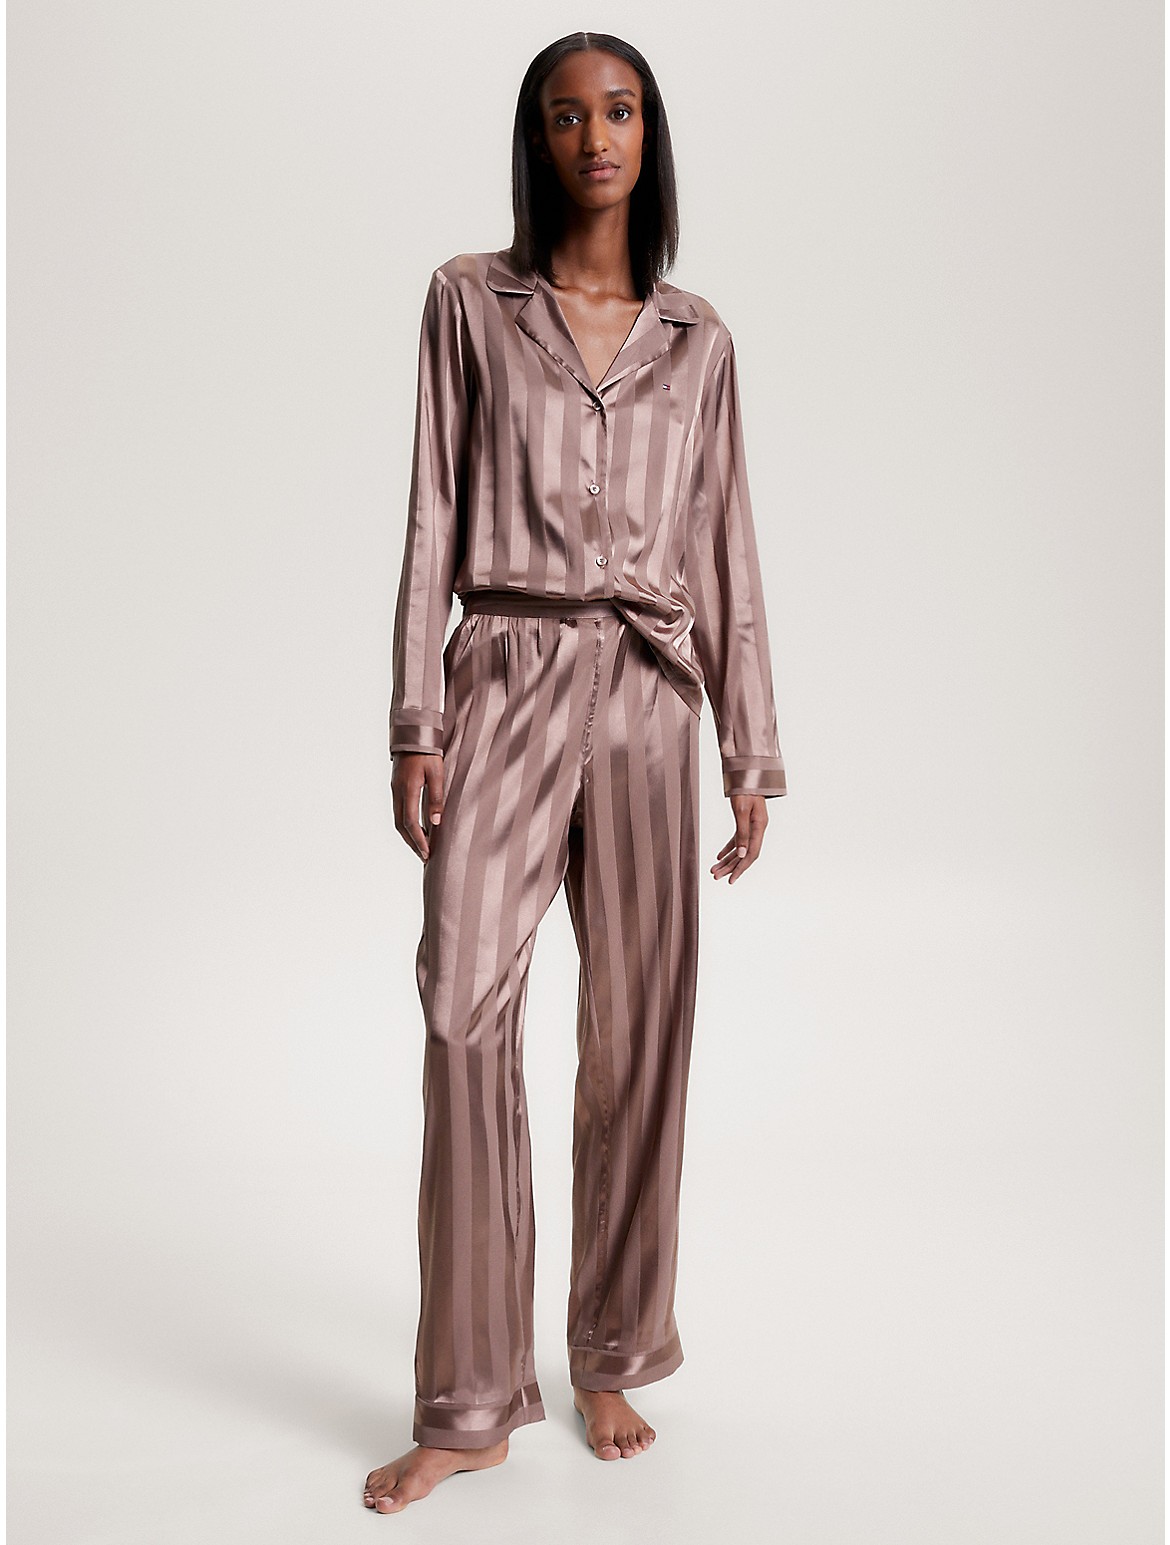 Tommy Hilfiger Women's Stripe Pajama Set - Pink - M